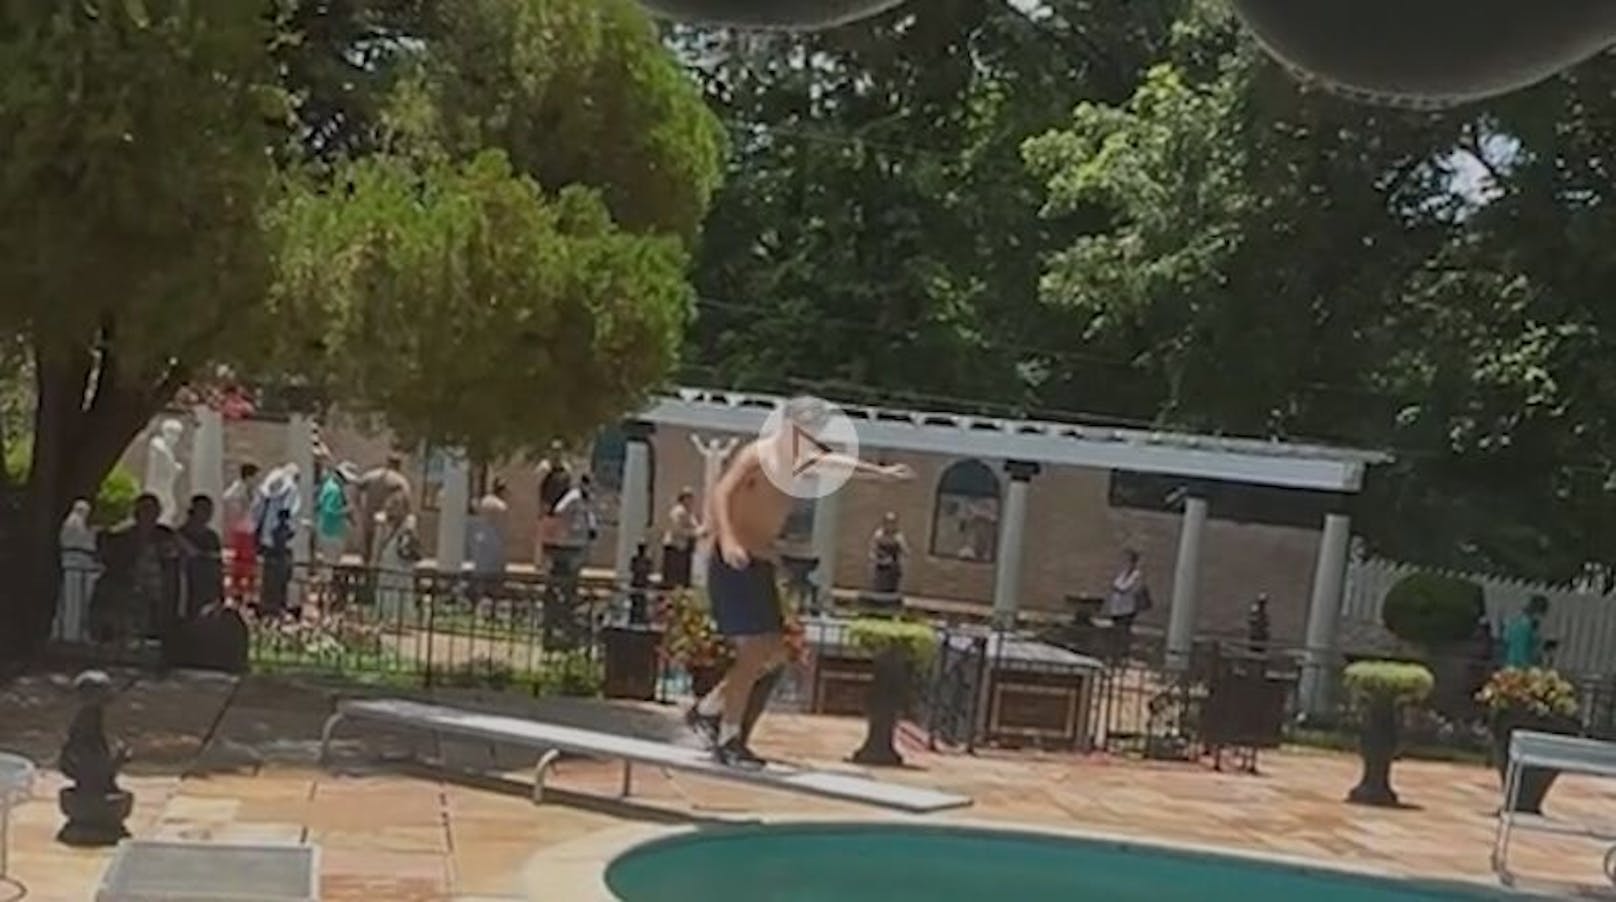 Rüpel-Tourist springt in Pool von Elvis Presley